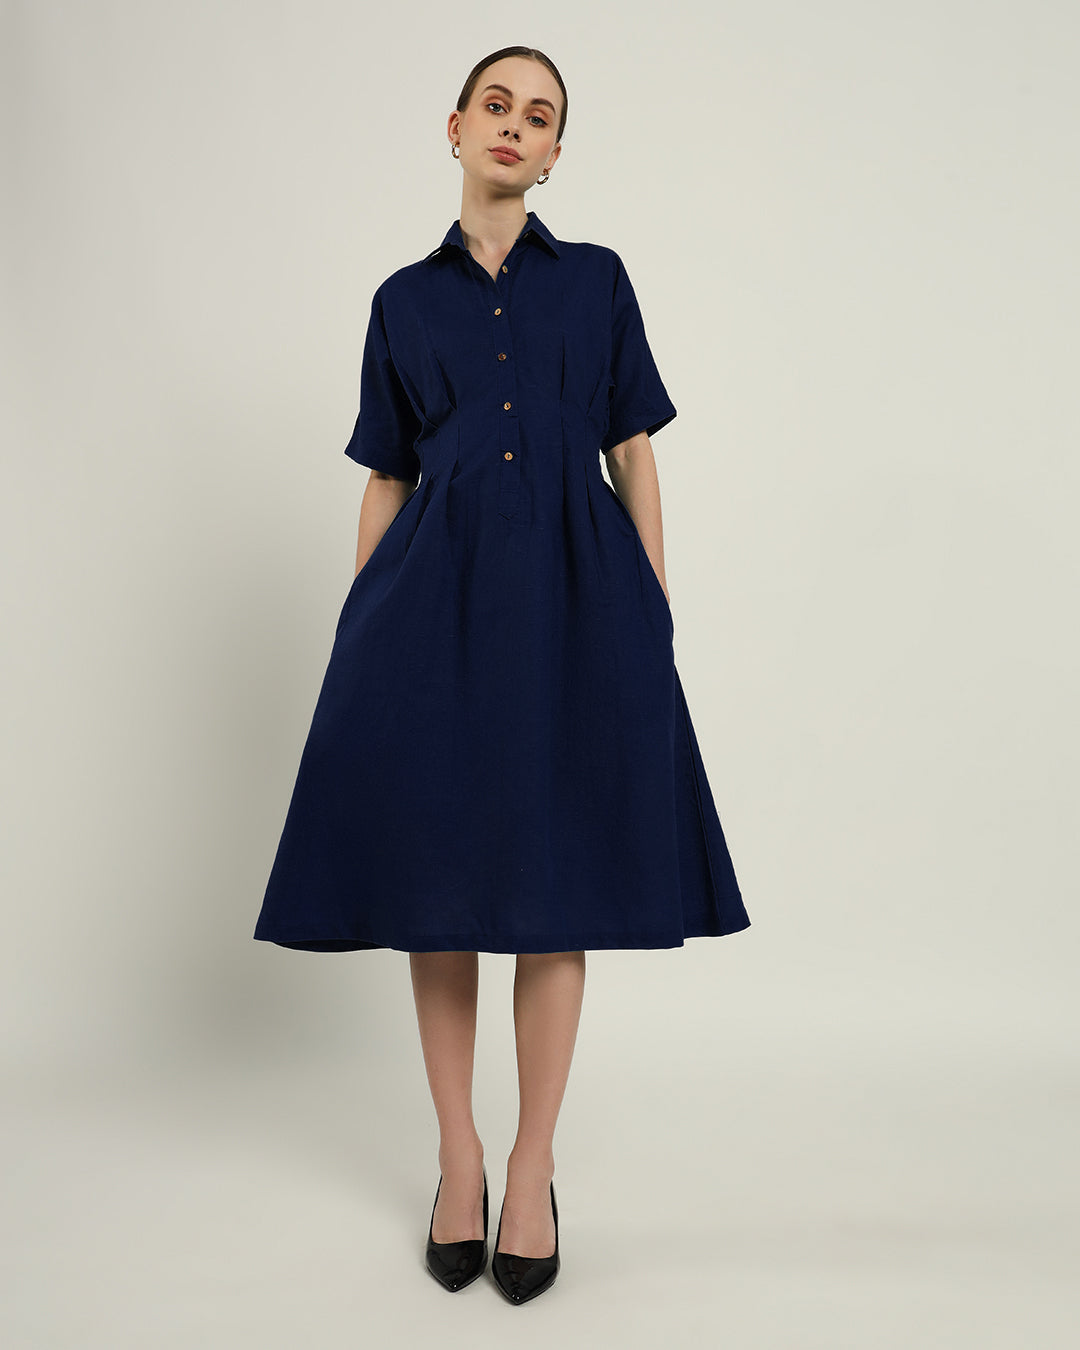 The Salford Daisy Midnight Blue Linen Dress